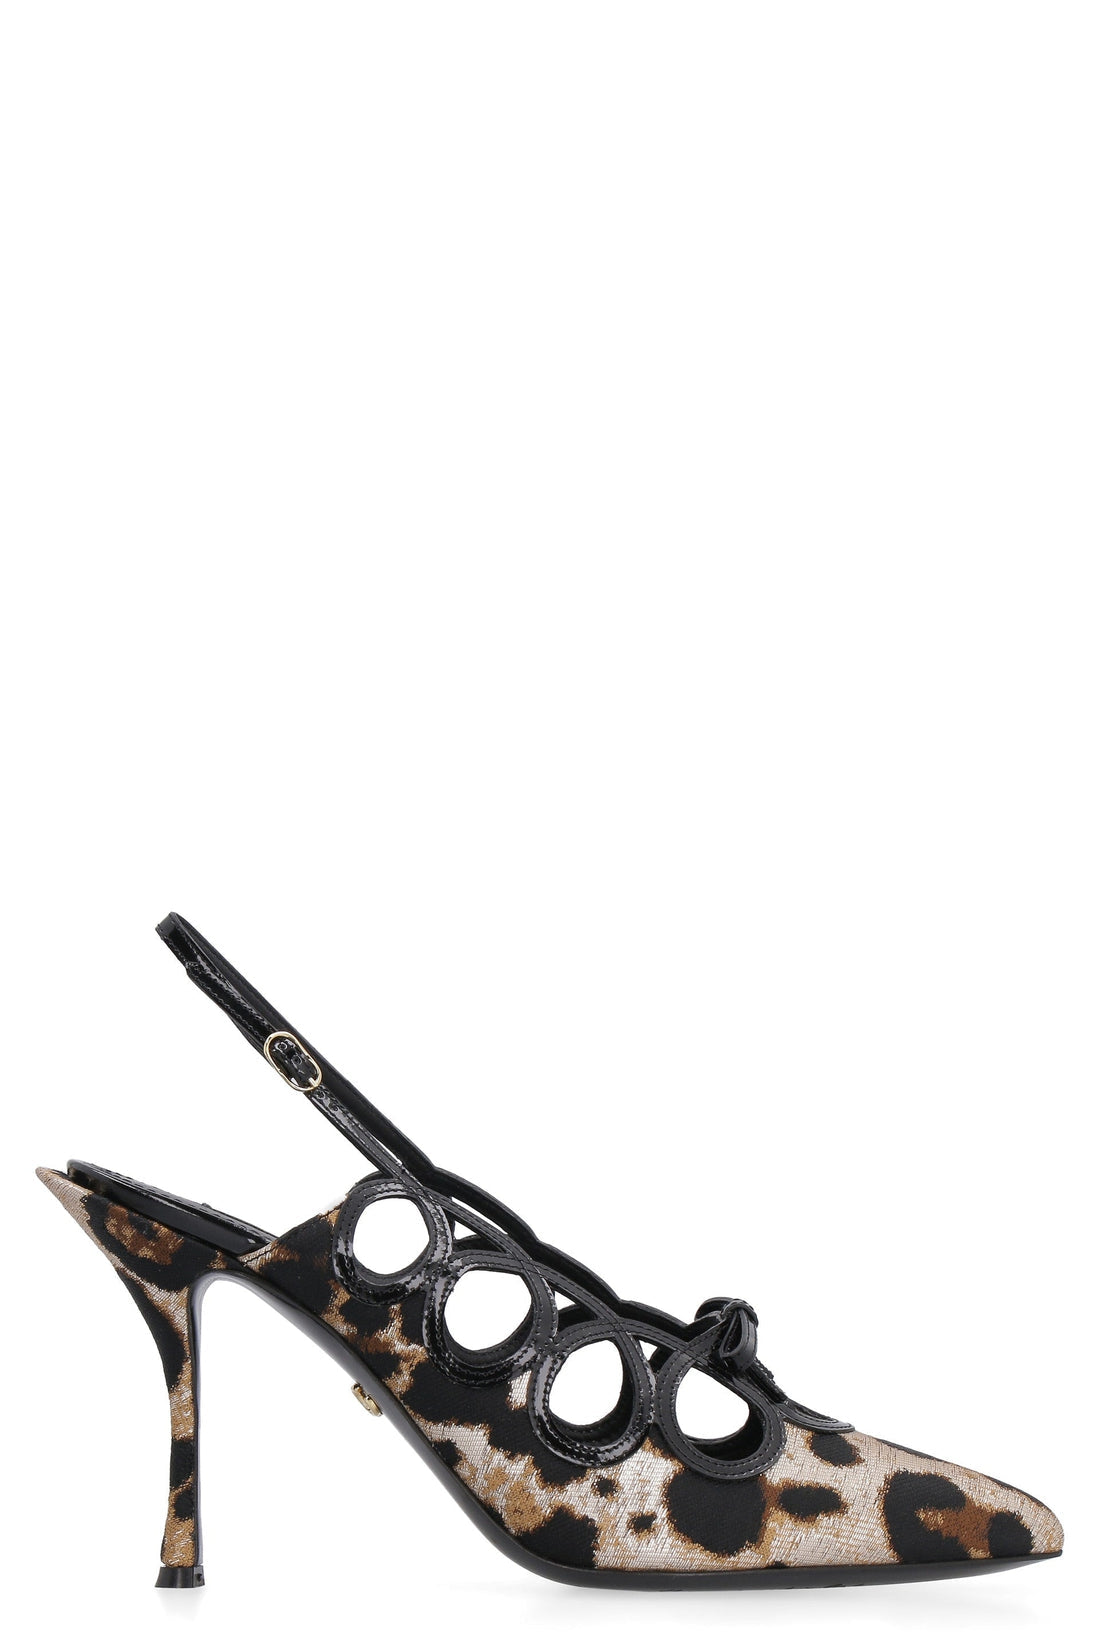 Dolce & Gabbana-OUTLET-SALE-Pointy-toe slingback pumps-ARCHIVIST